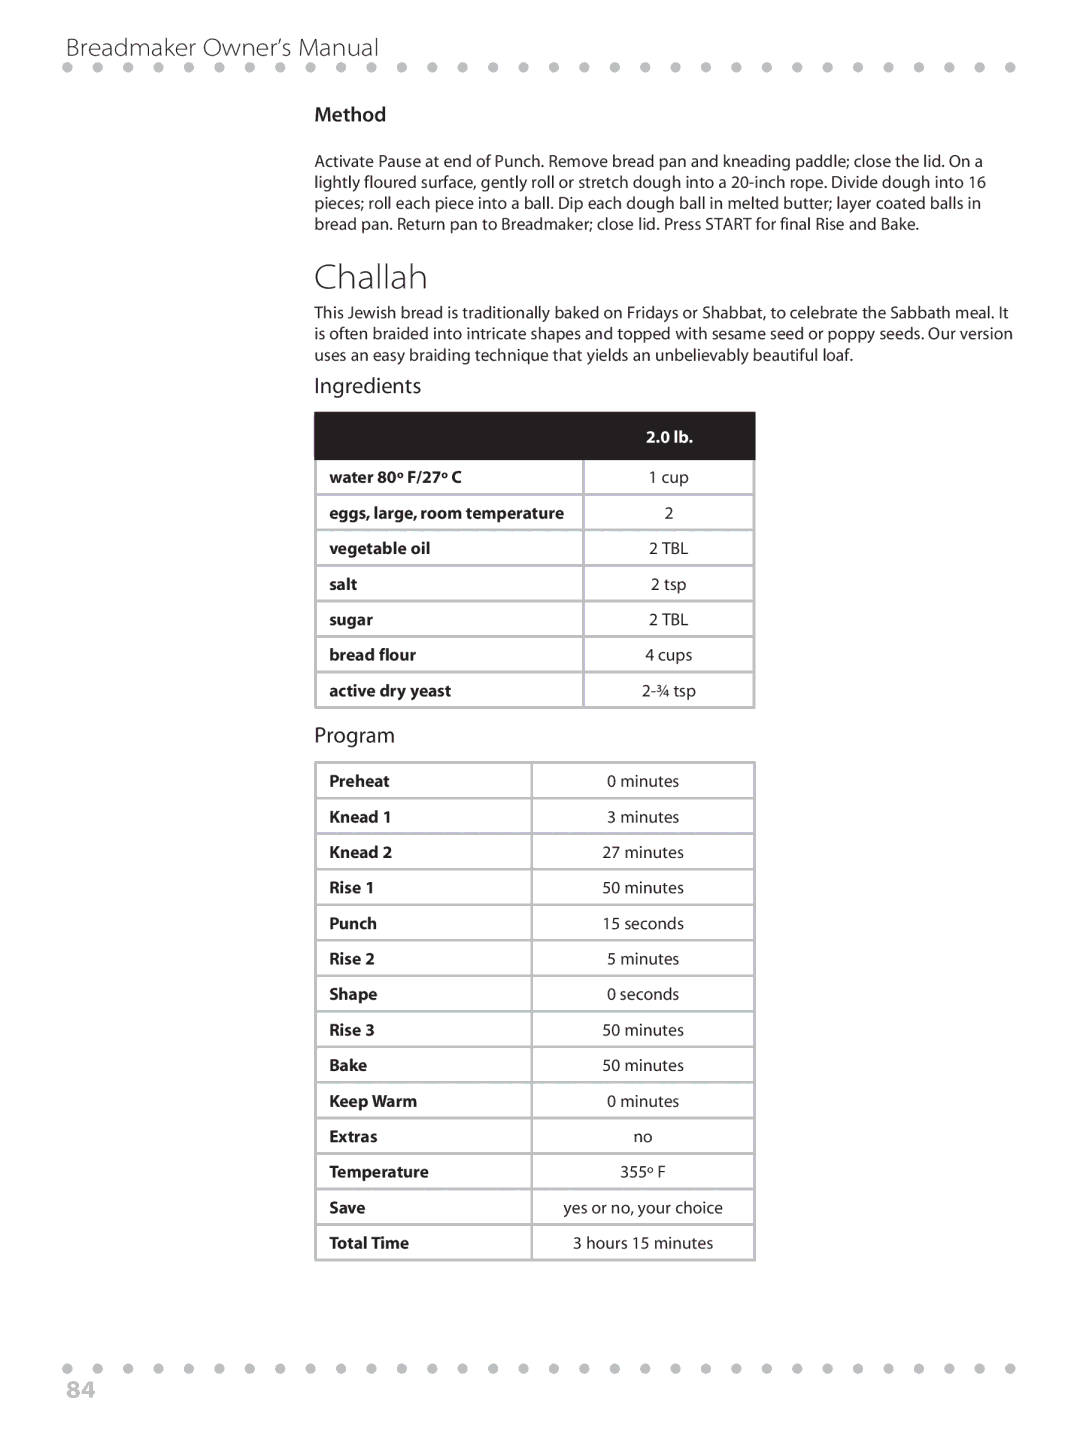 Toastmaster WBYBM1 manual Challah, Preheat 